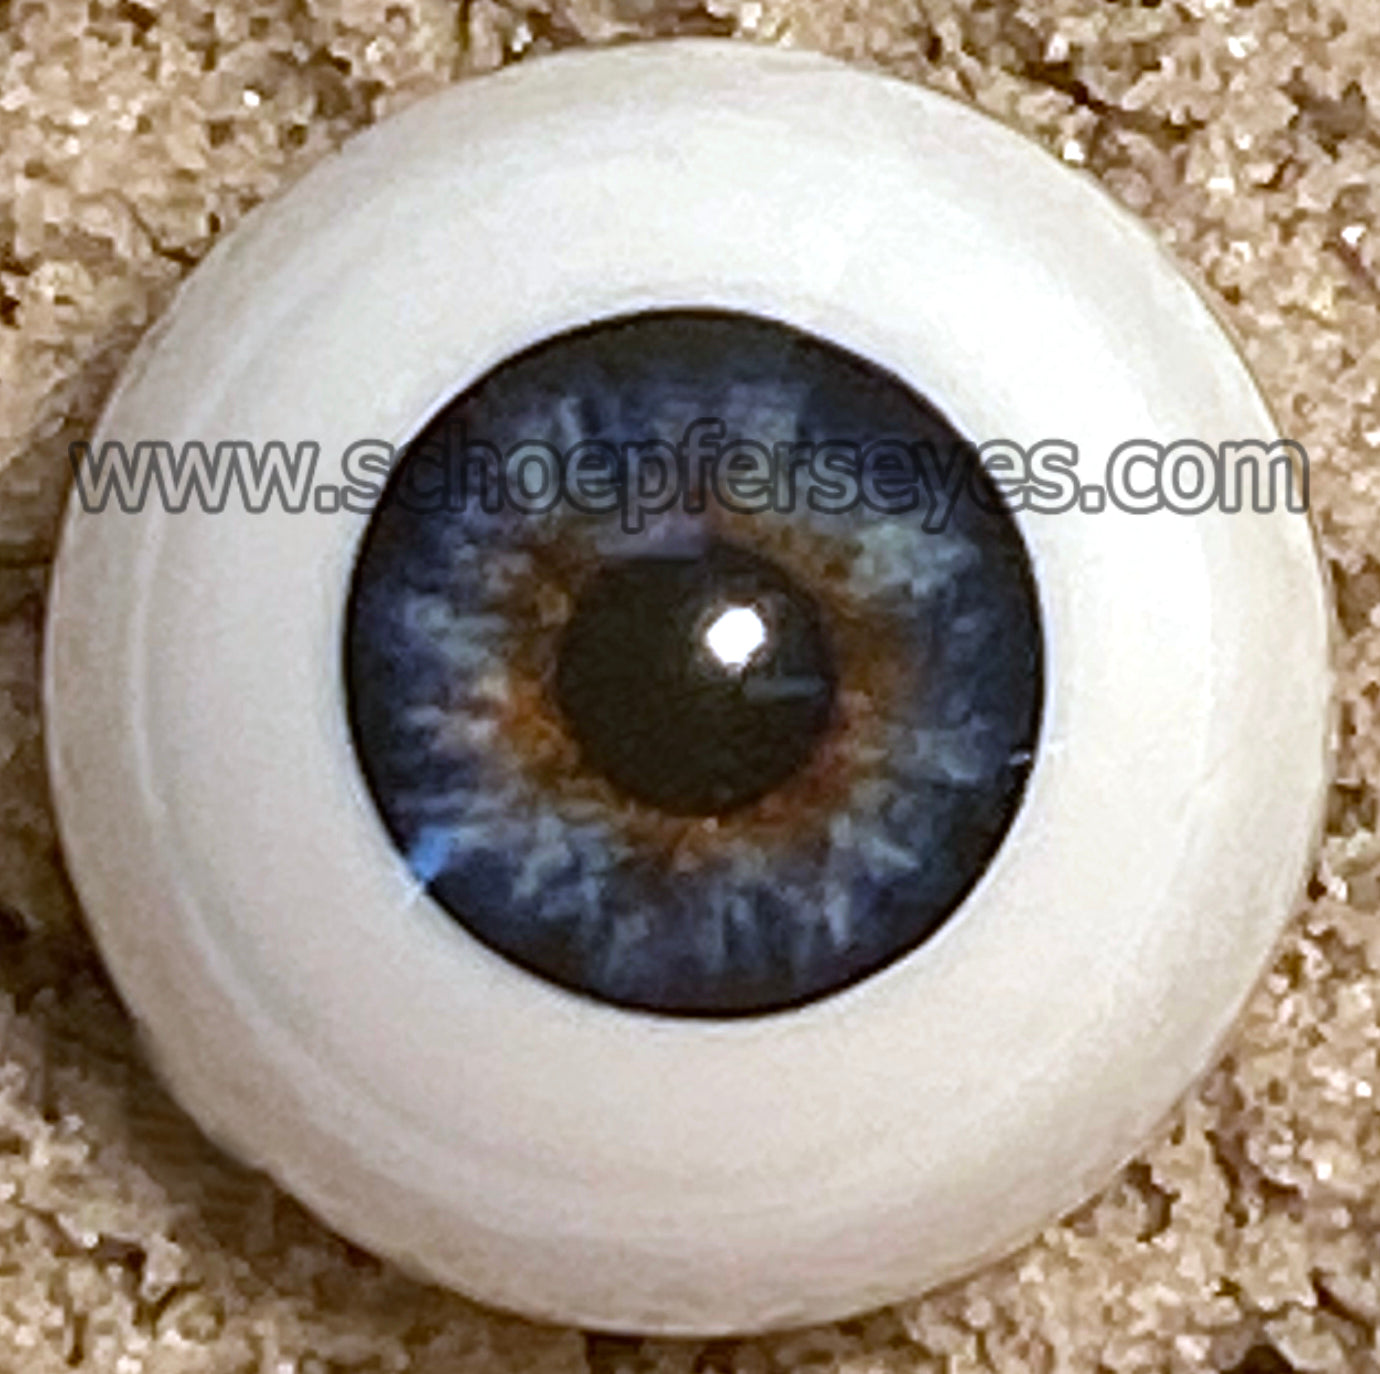 Glastic Realistic Acrylic Doll Eyes - 1 pair (5050 Series) | G ...